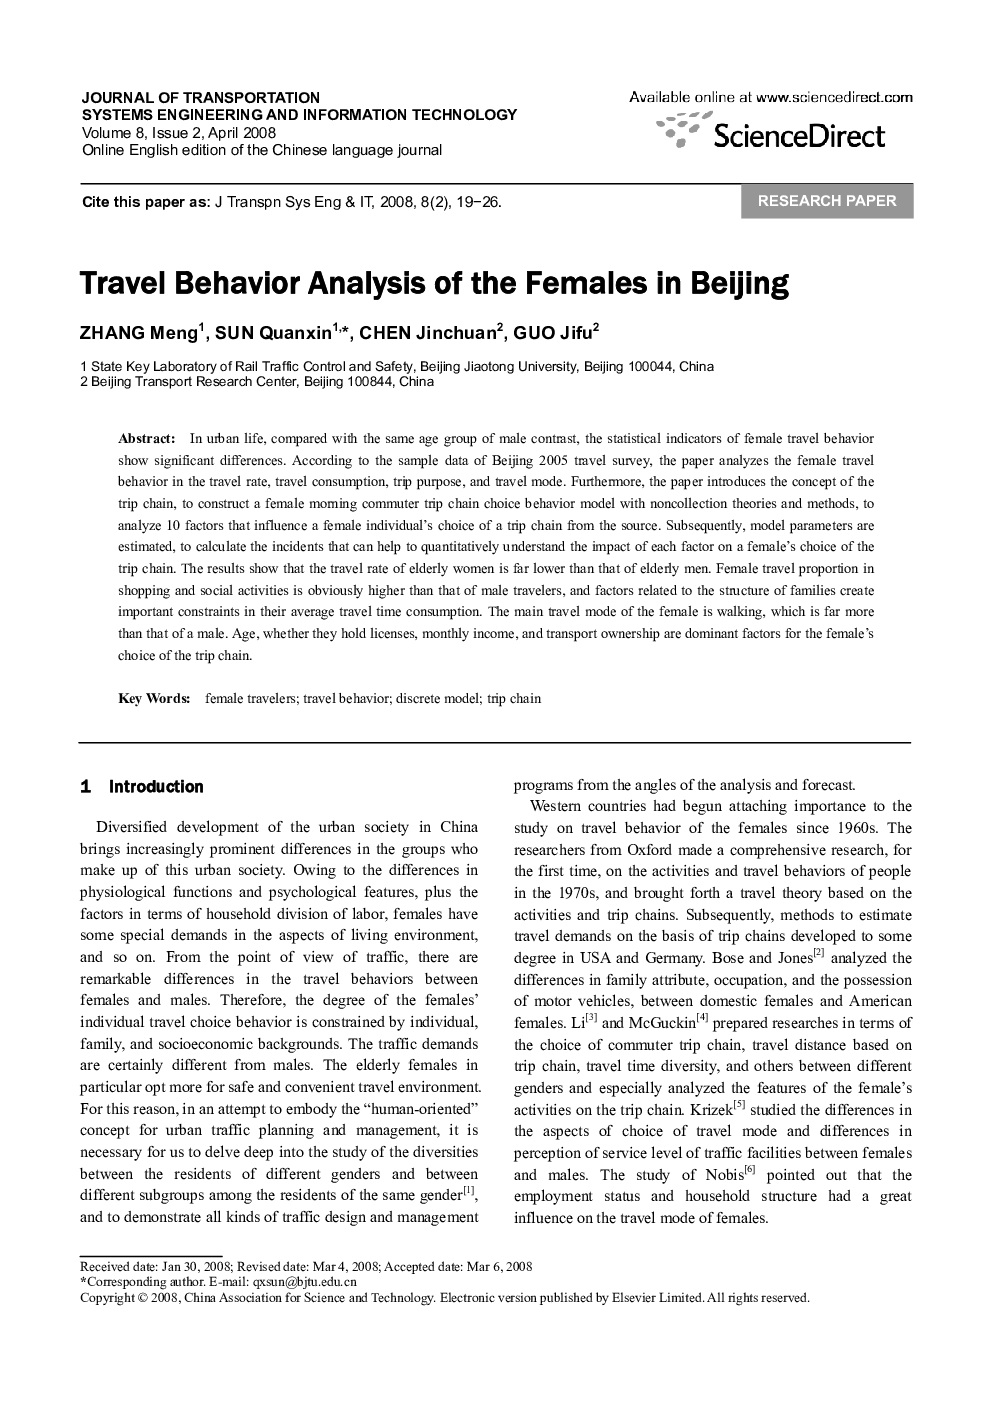 Travel Behavior Analysis of the Females in Beijing